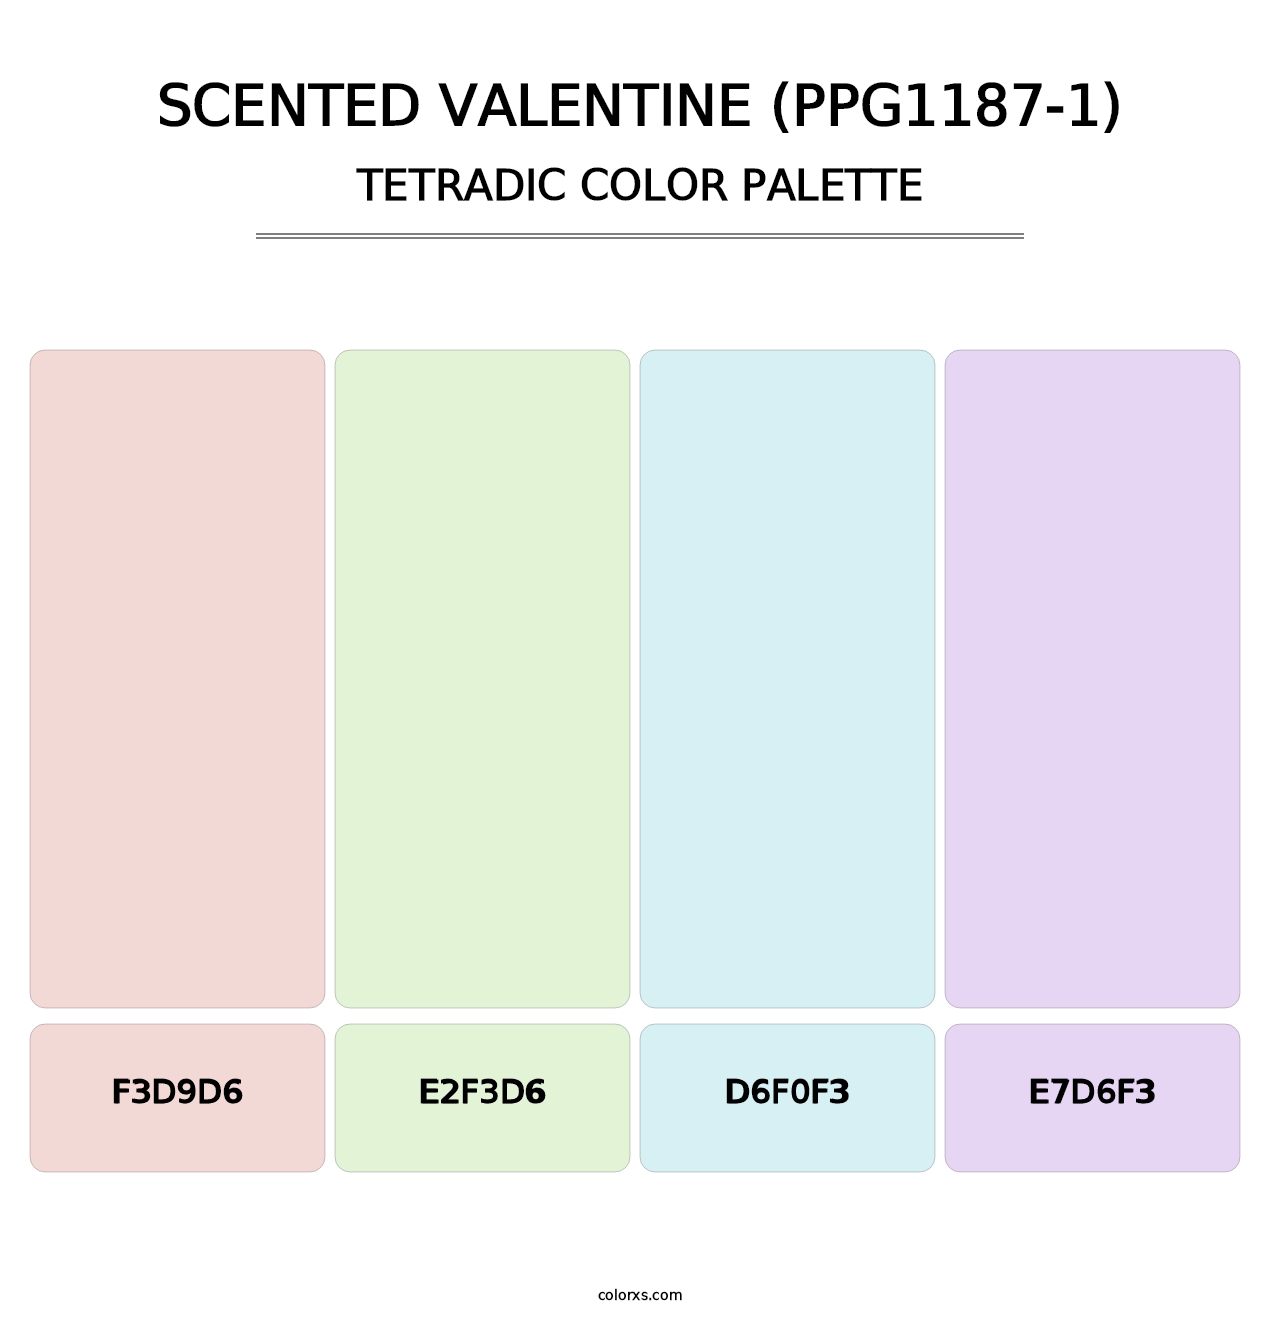 Scented Valentine (PPG1187-1) - Tetradic Color Palette